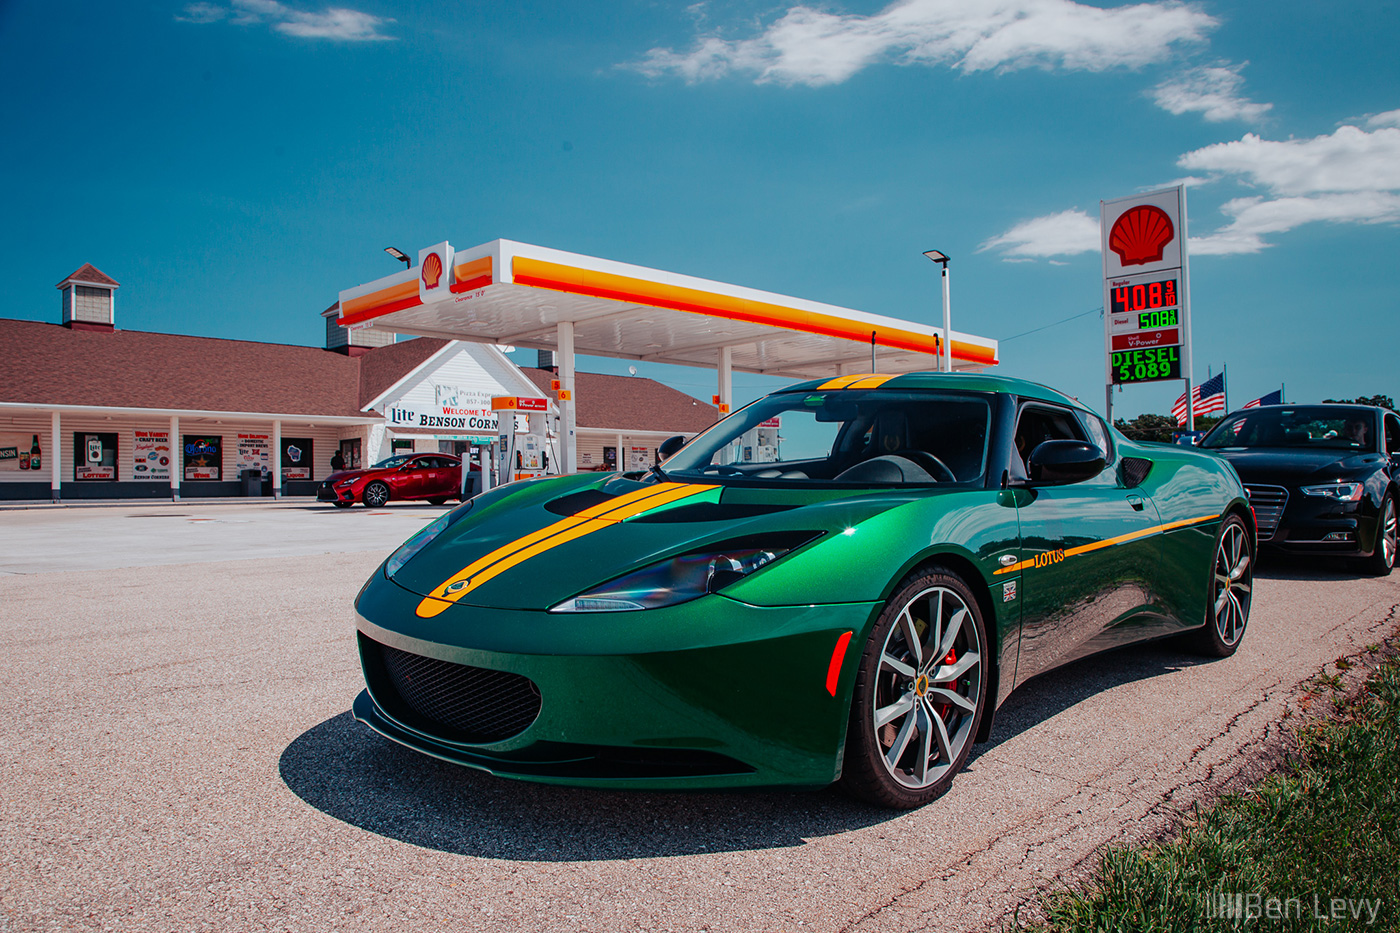 Green Lotus Evora at Wisconsin Gas Station